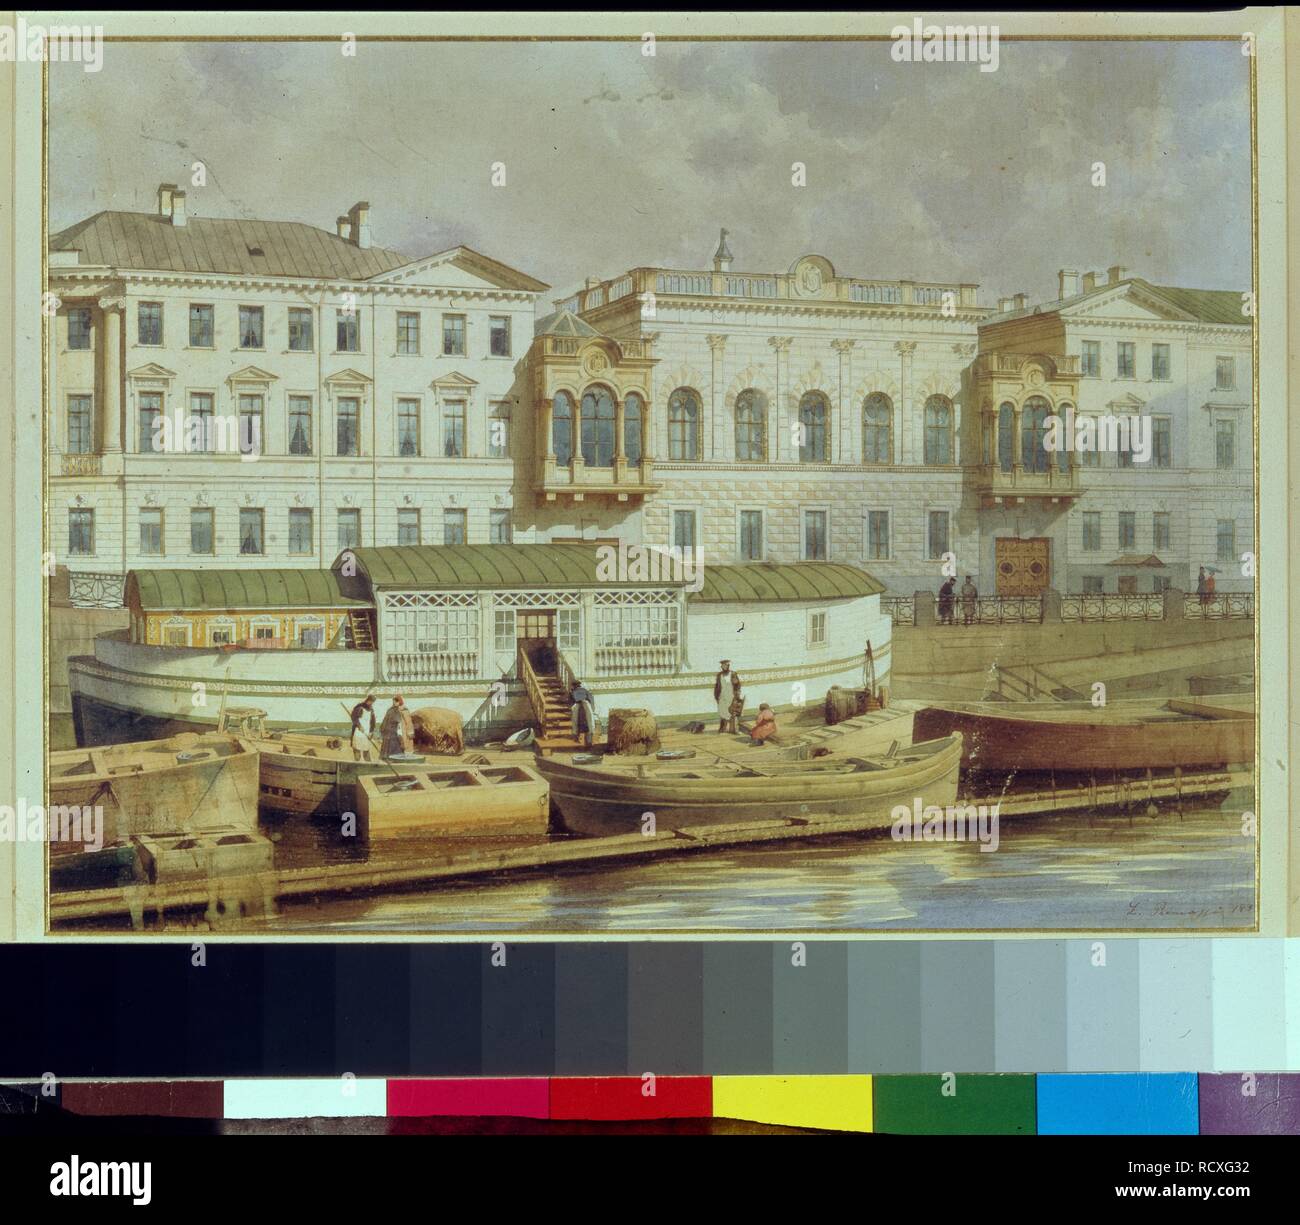 Naryshkin Palace on the Fontanka river. Museum: PRIVATE COLLECTION. Author: Premazzi, Ludwig (Luigi). Stock Photo